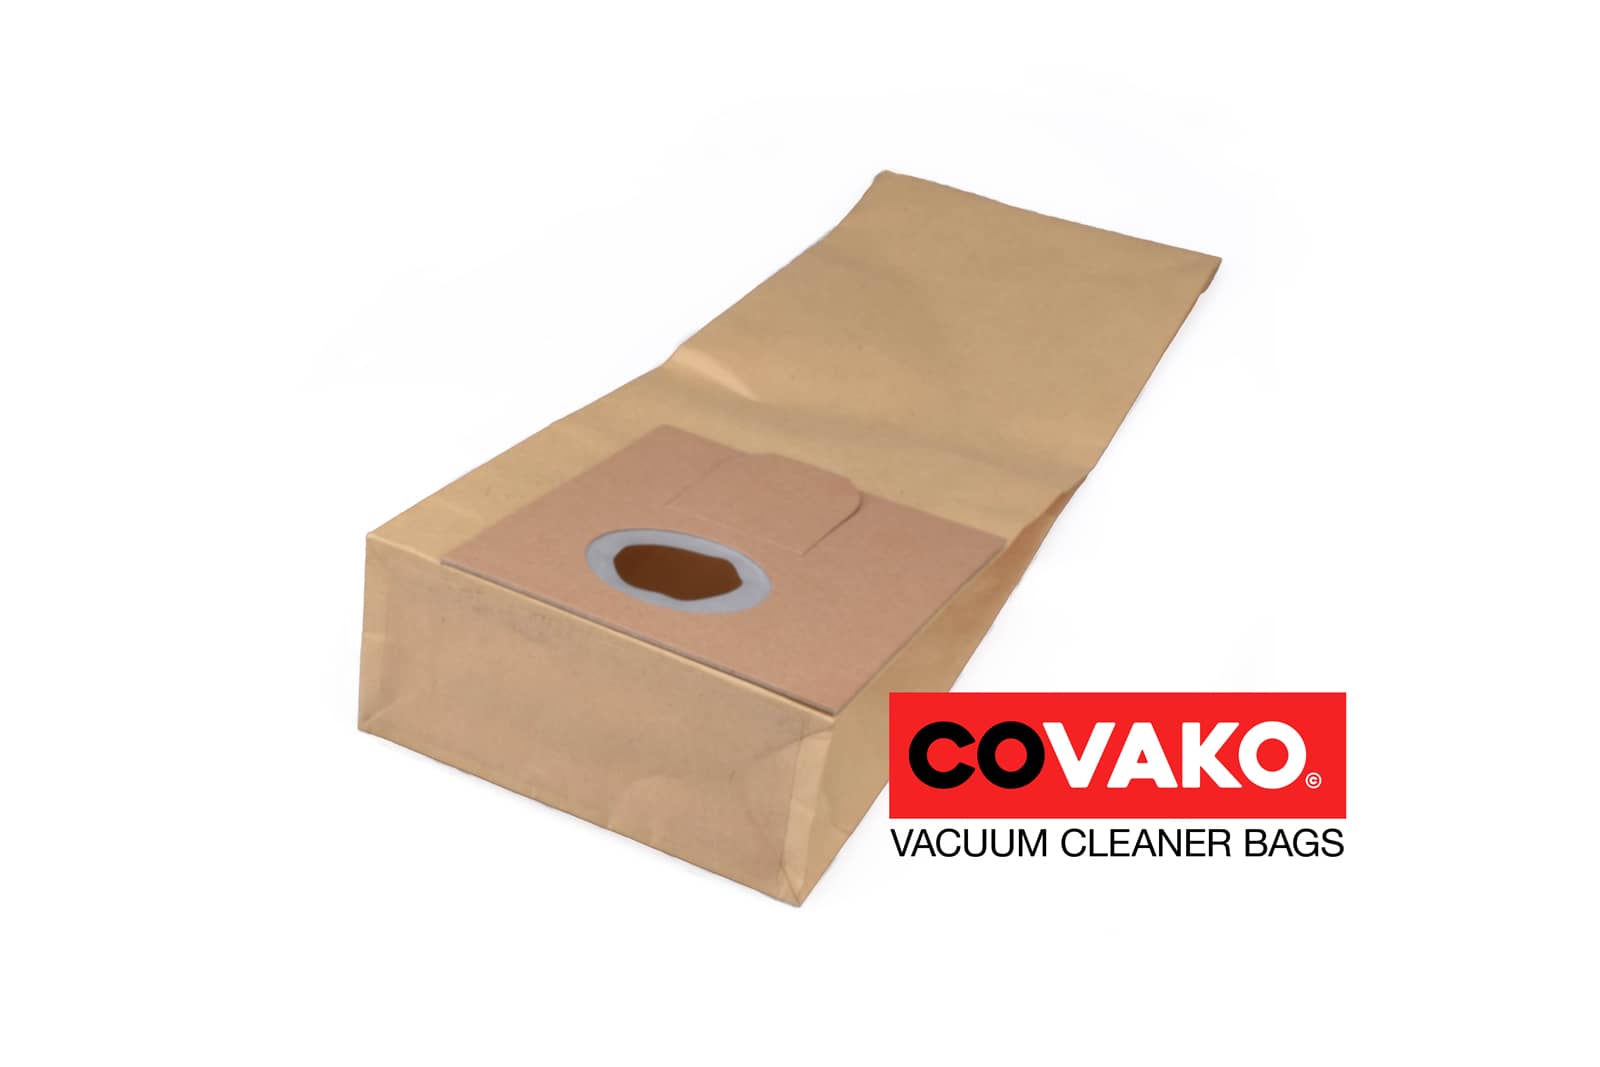 Clean a la Card UP 450 / Paper - Clean a la Card vacuum cleaner bags